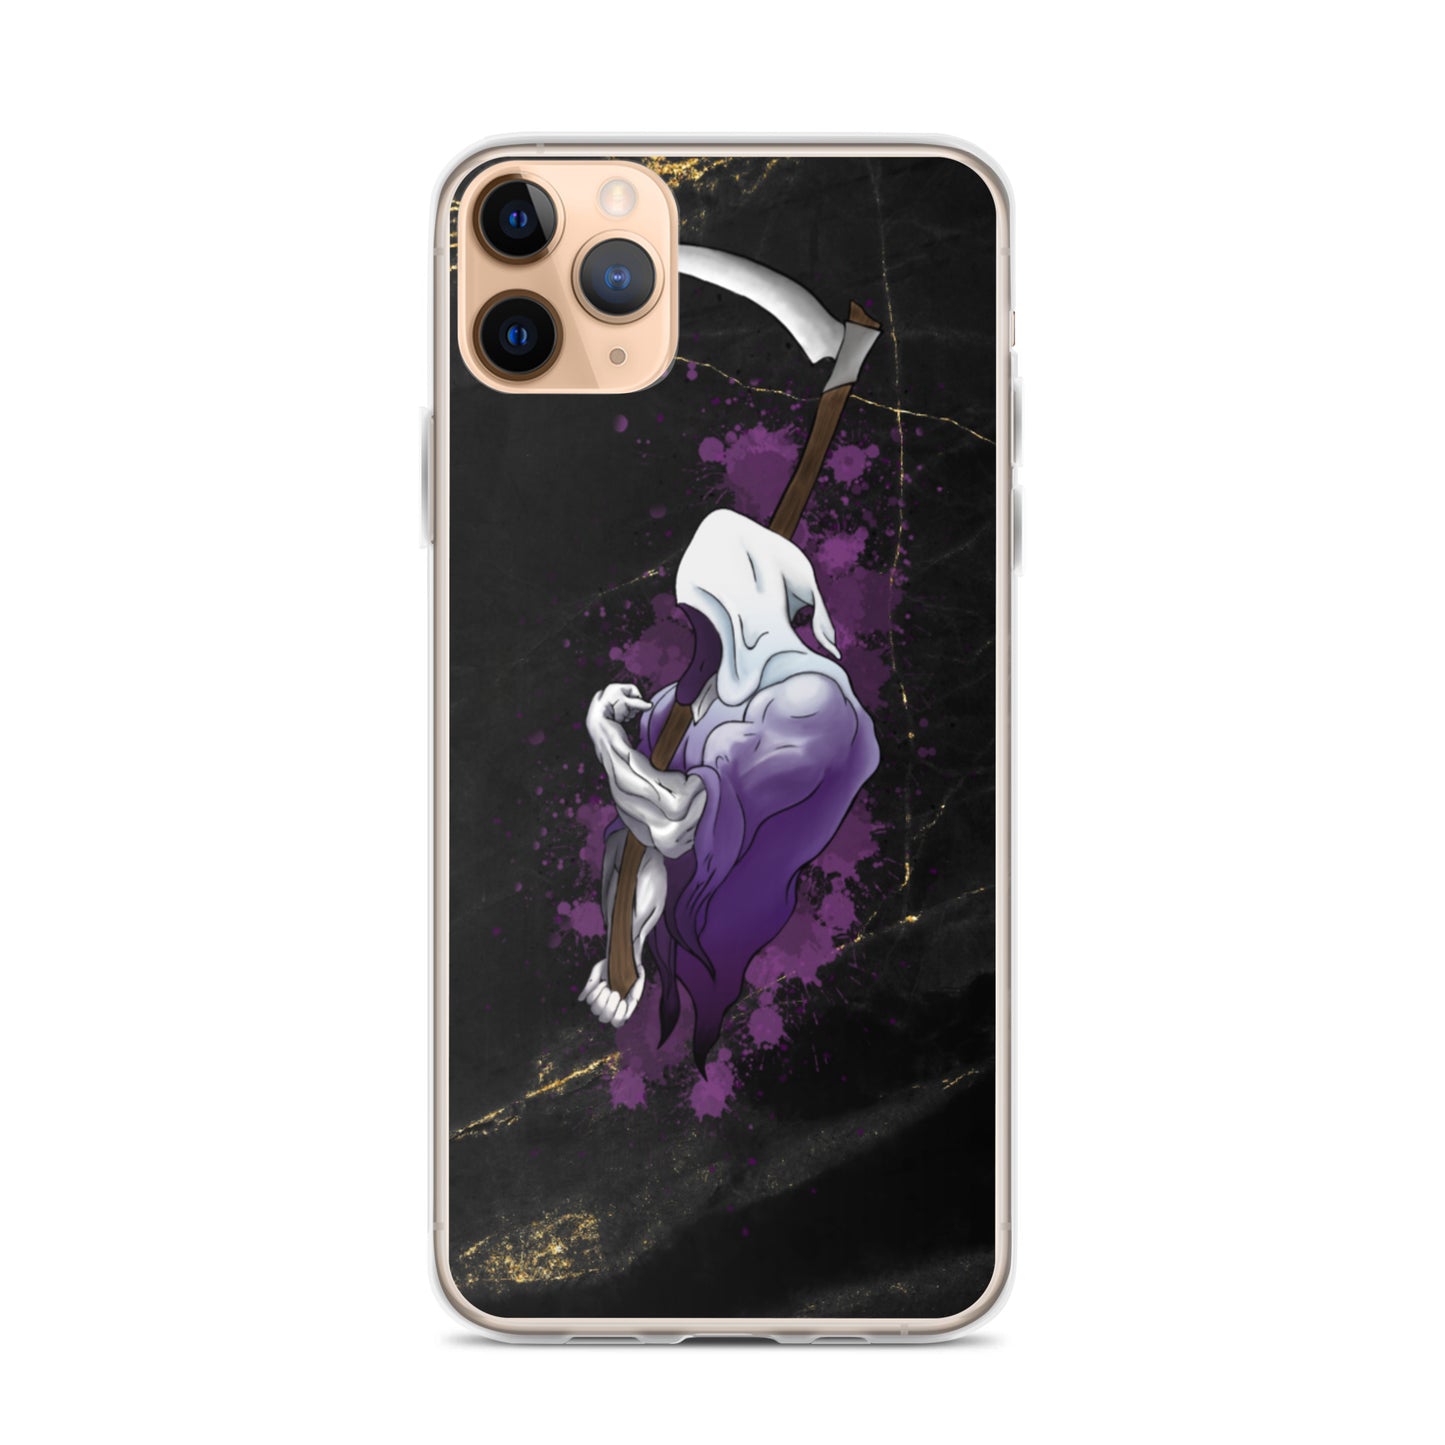 Grip Reaper iPhone 11 Pro Max Case